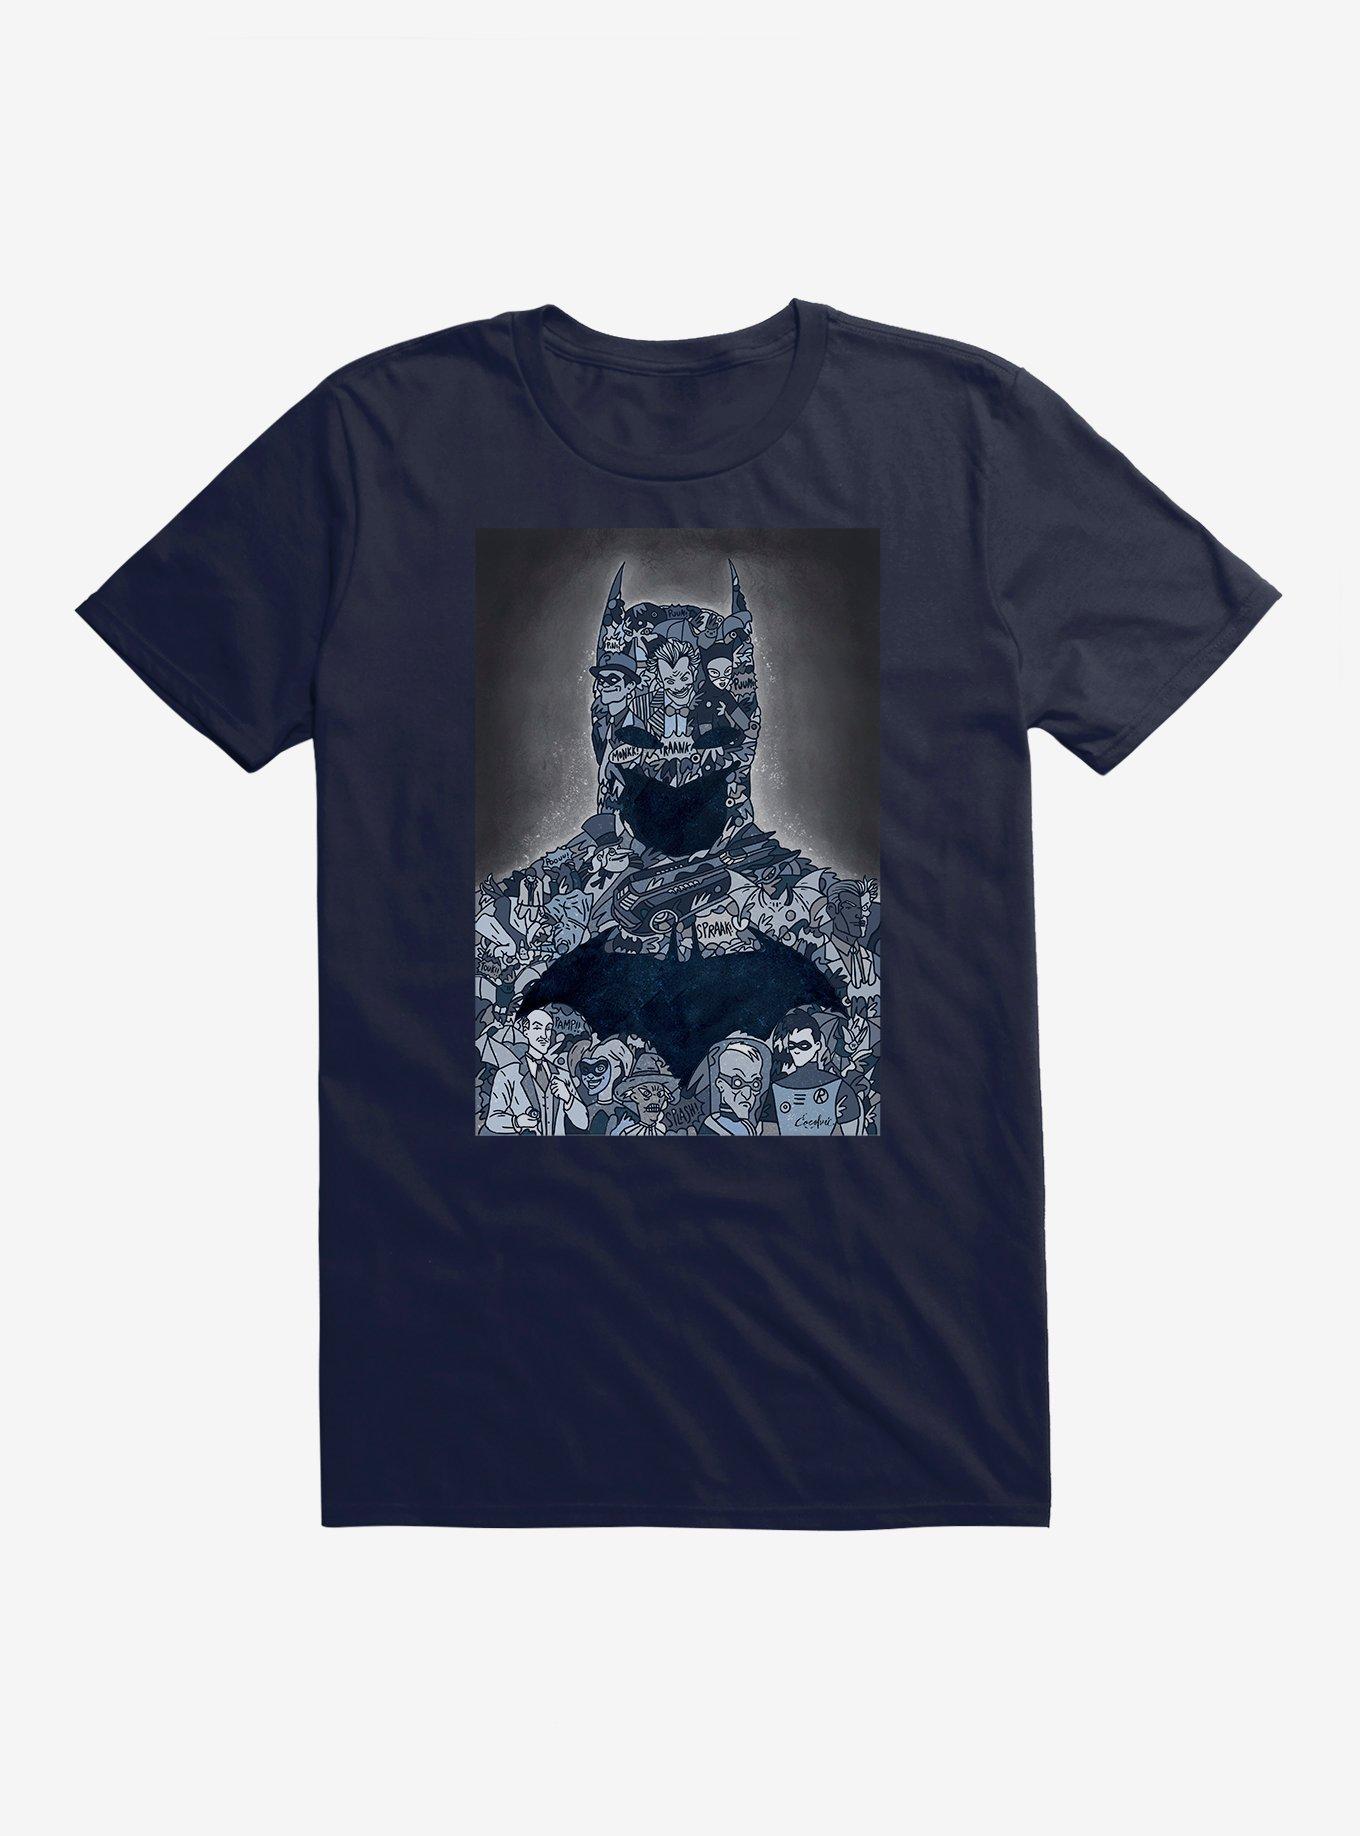 Batman WB 100 Collage Silhouette T-Shirt, , hi-res